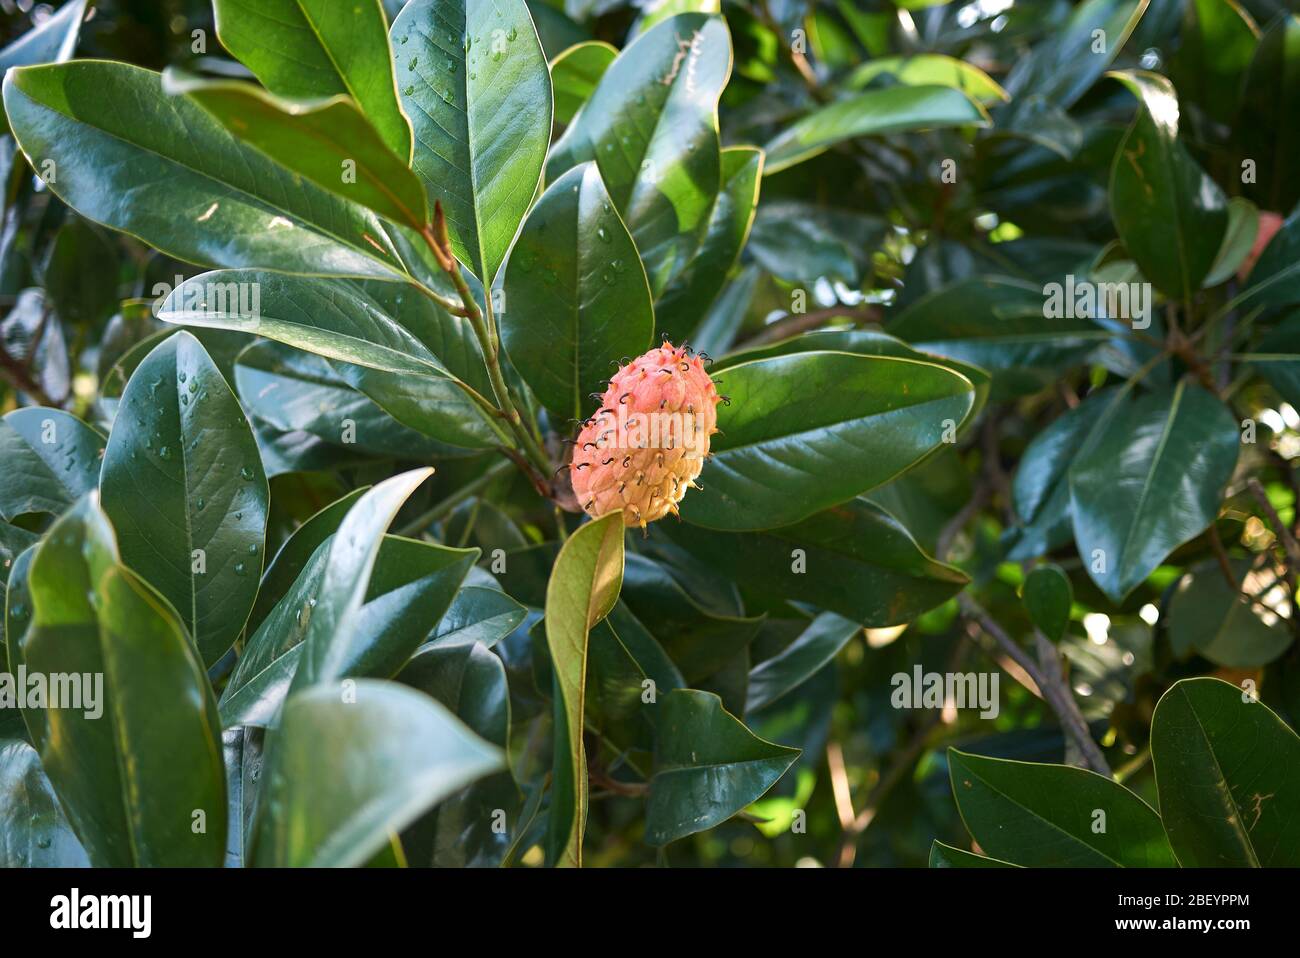 Magnolia grandiflora branch with fruit Stock Photo